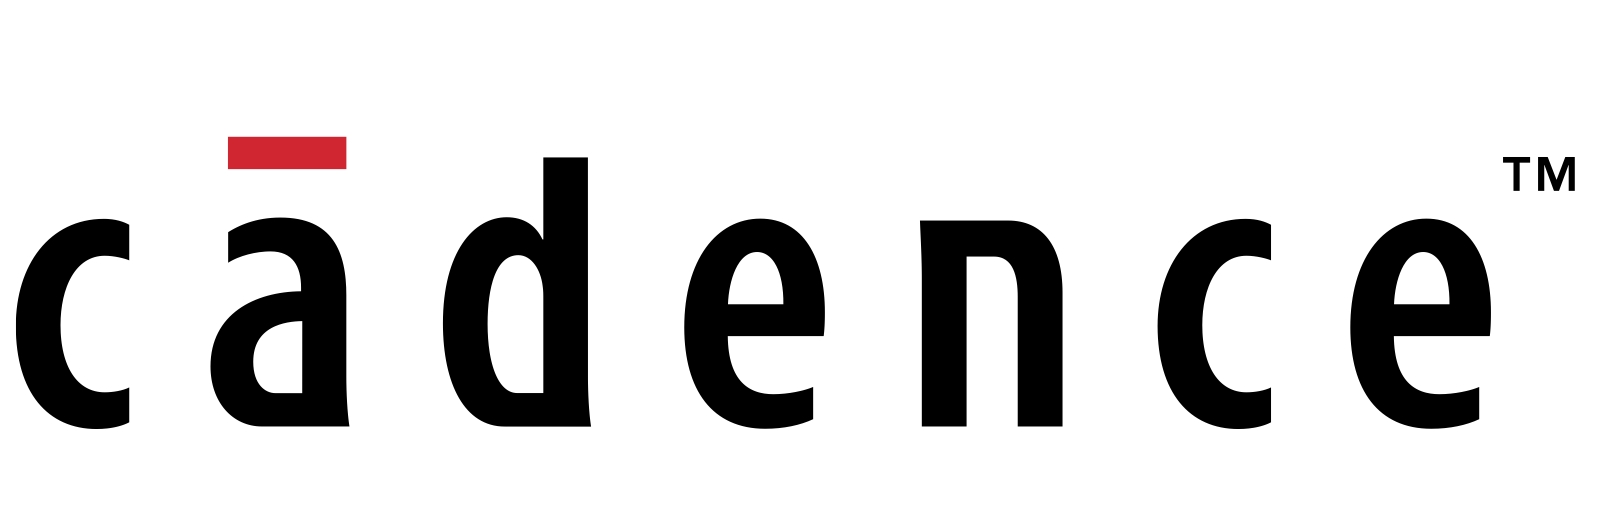 cadence-design-syste-logo.jpg